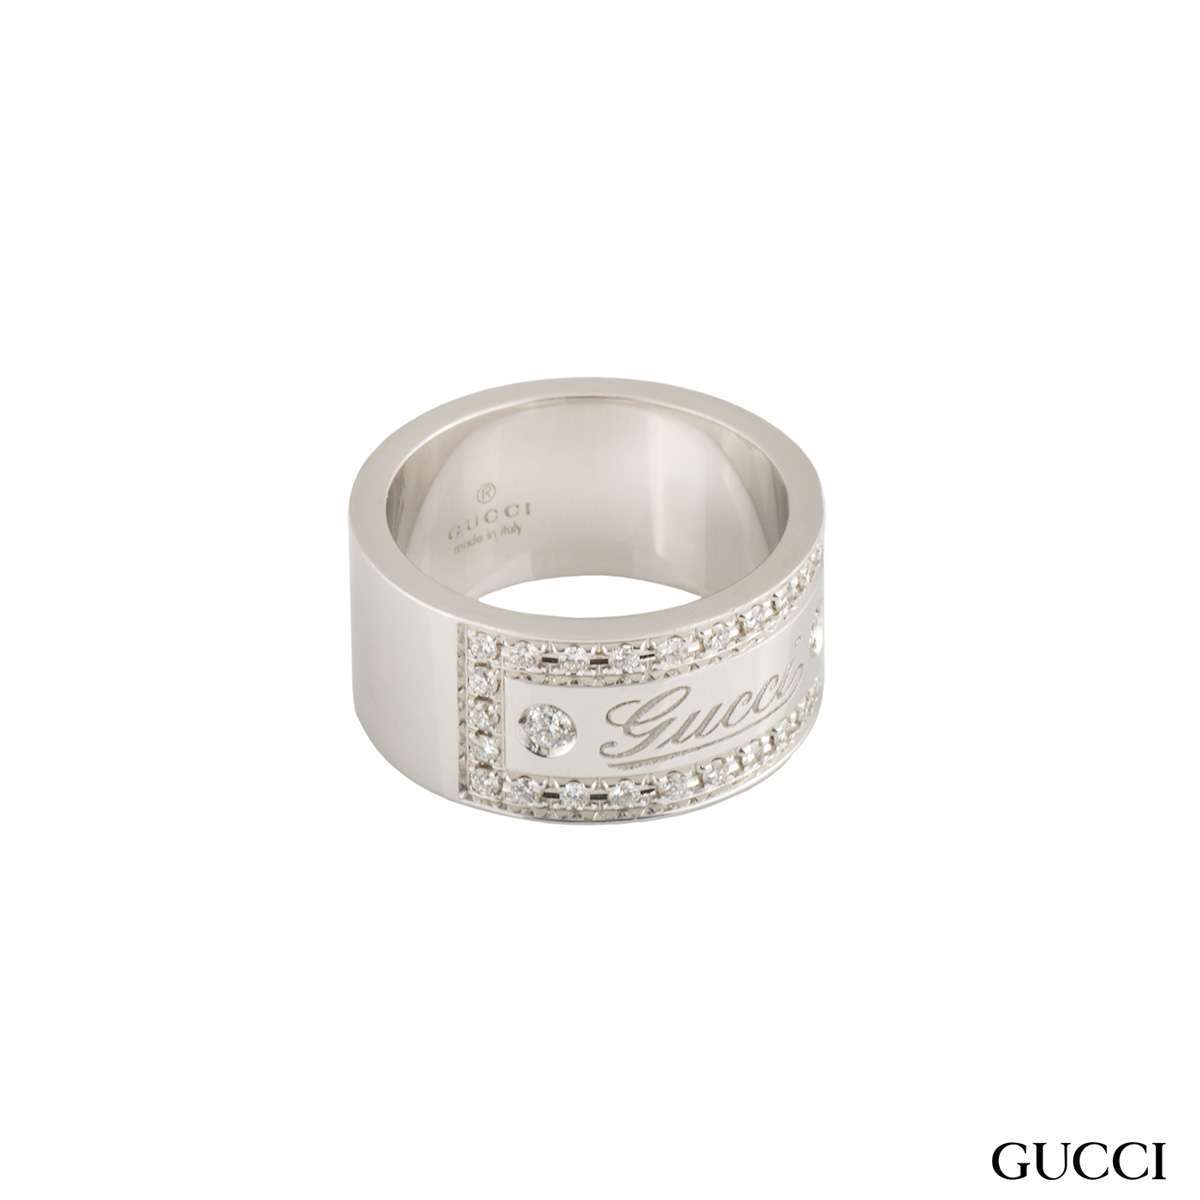 Gucci White Gold Diamond Band Ring